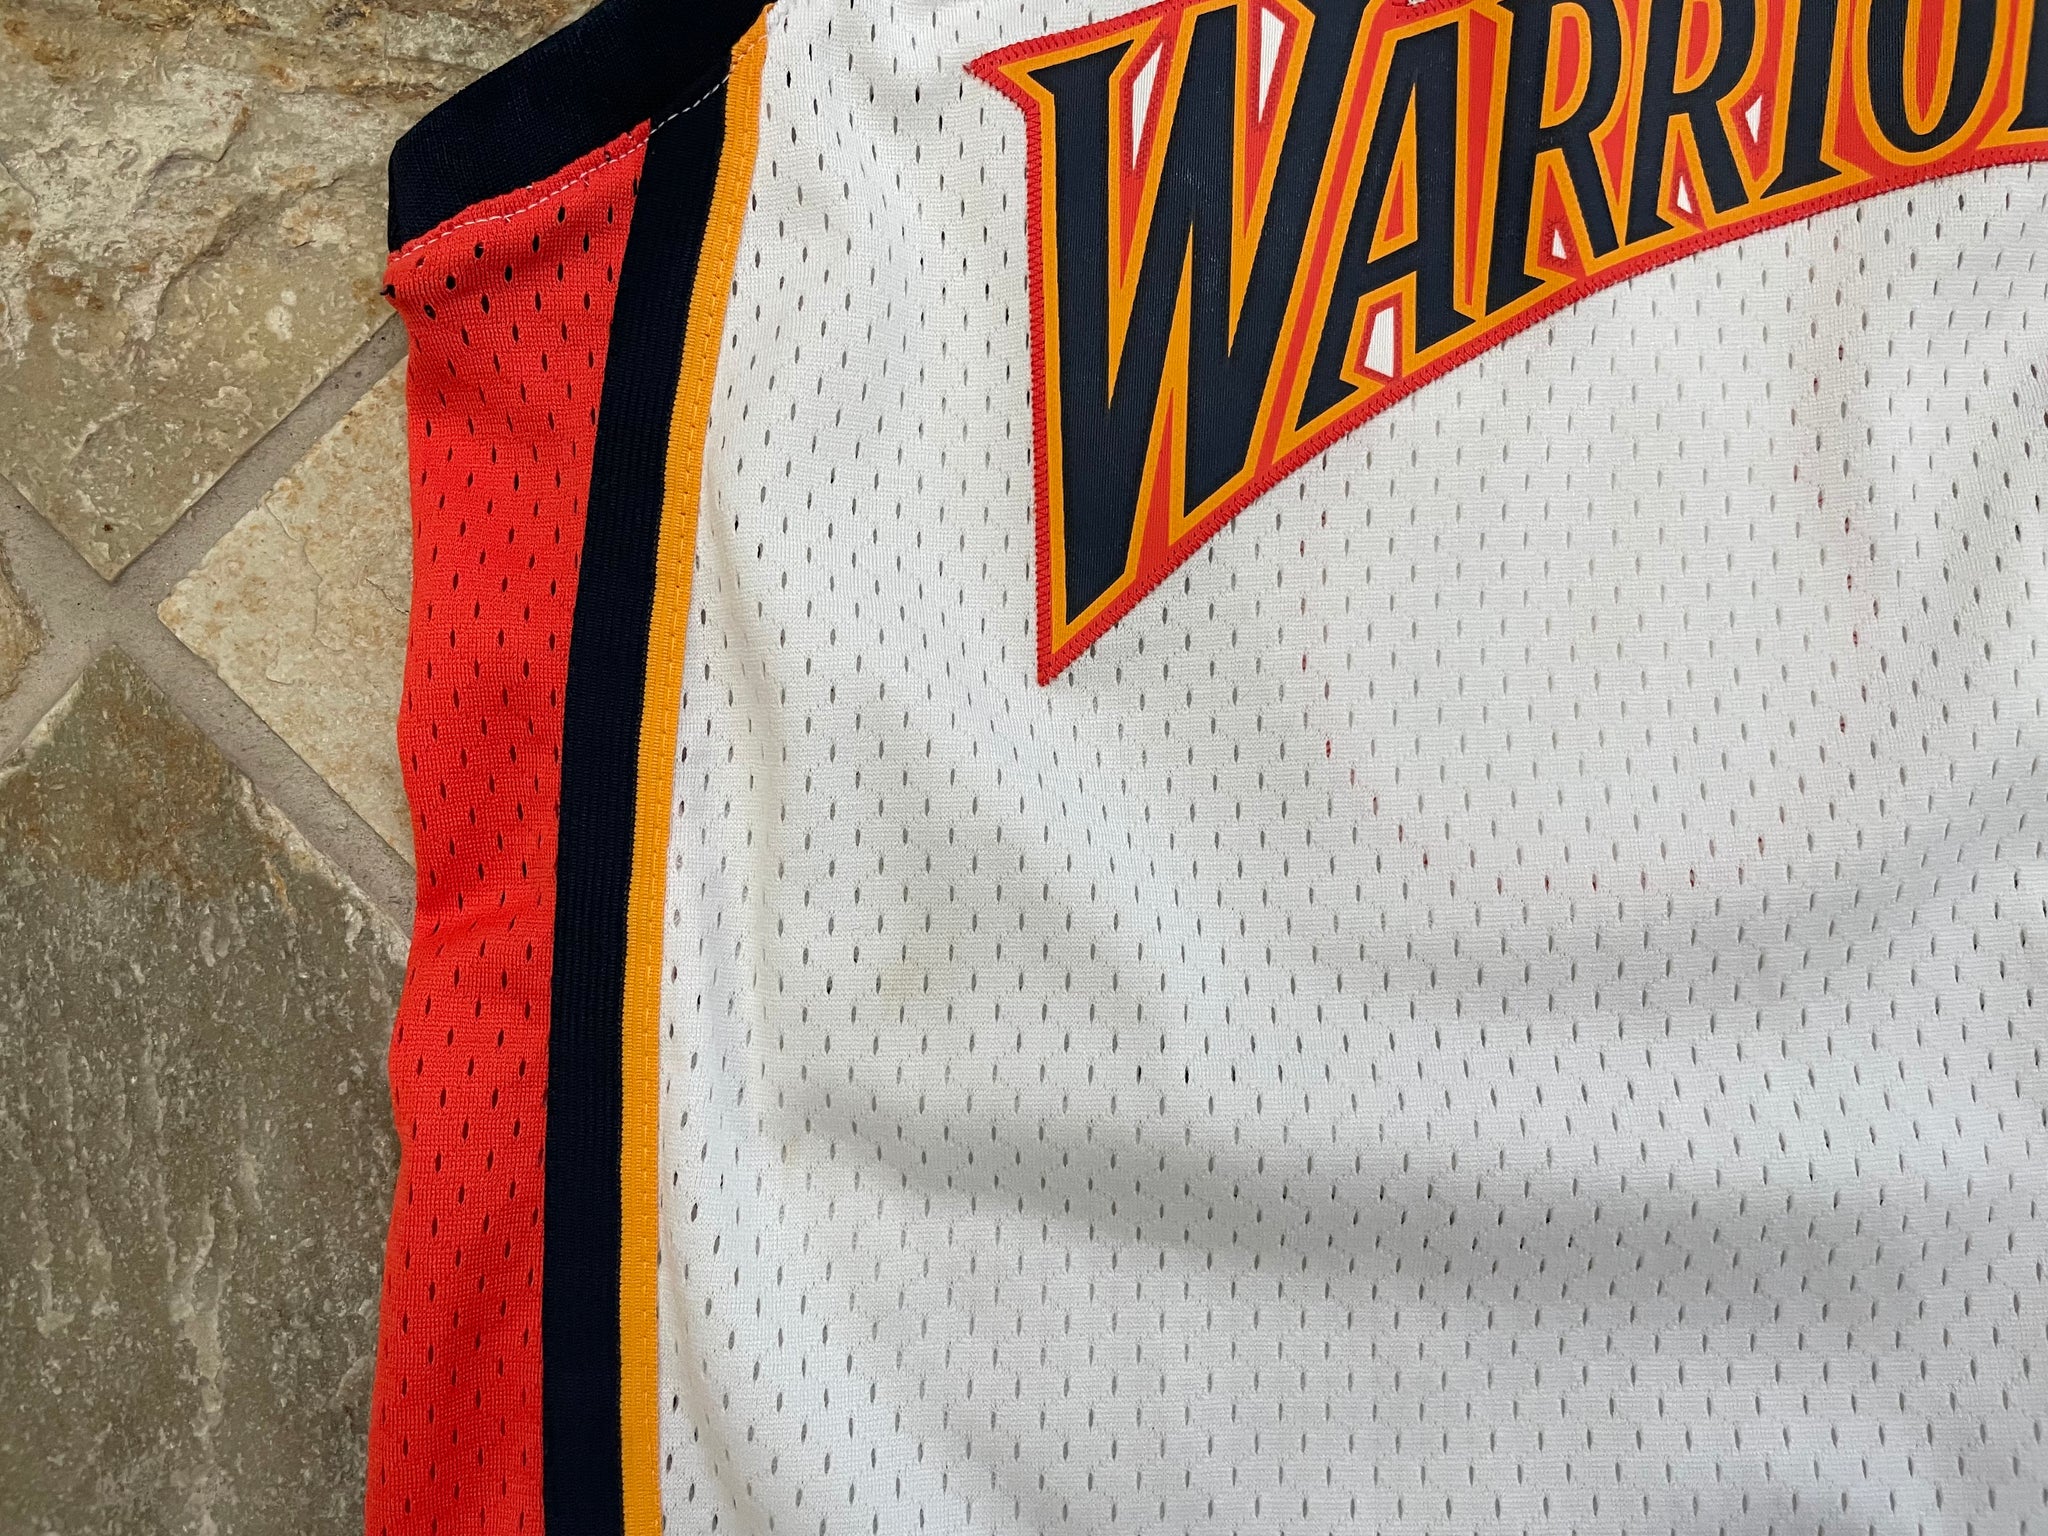 Golden State Warriors Basketball Jersey Adidas 3XL +2 Ellis Sewn Logo  Stains